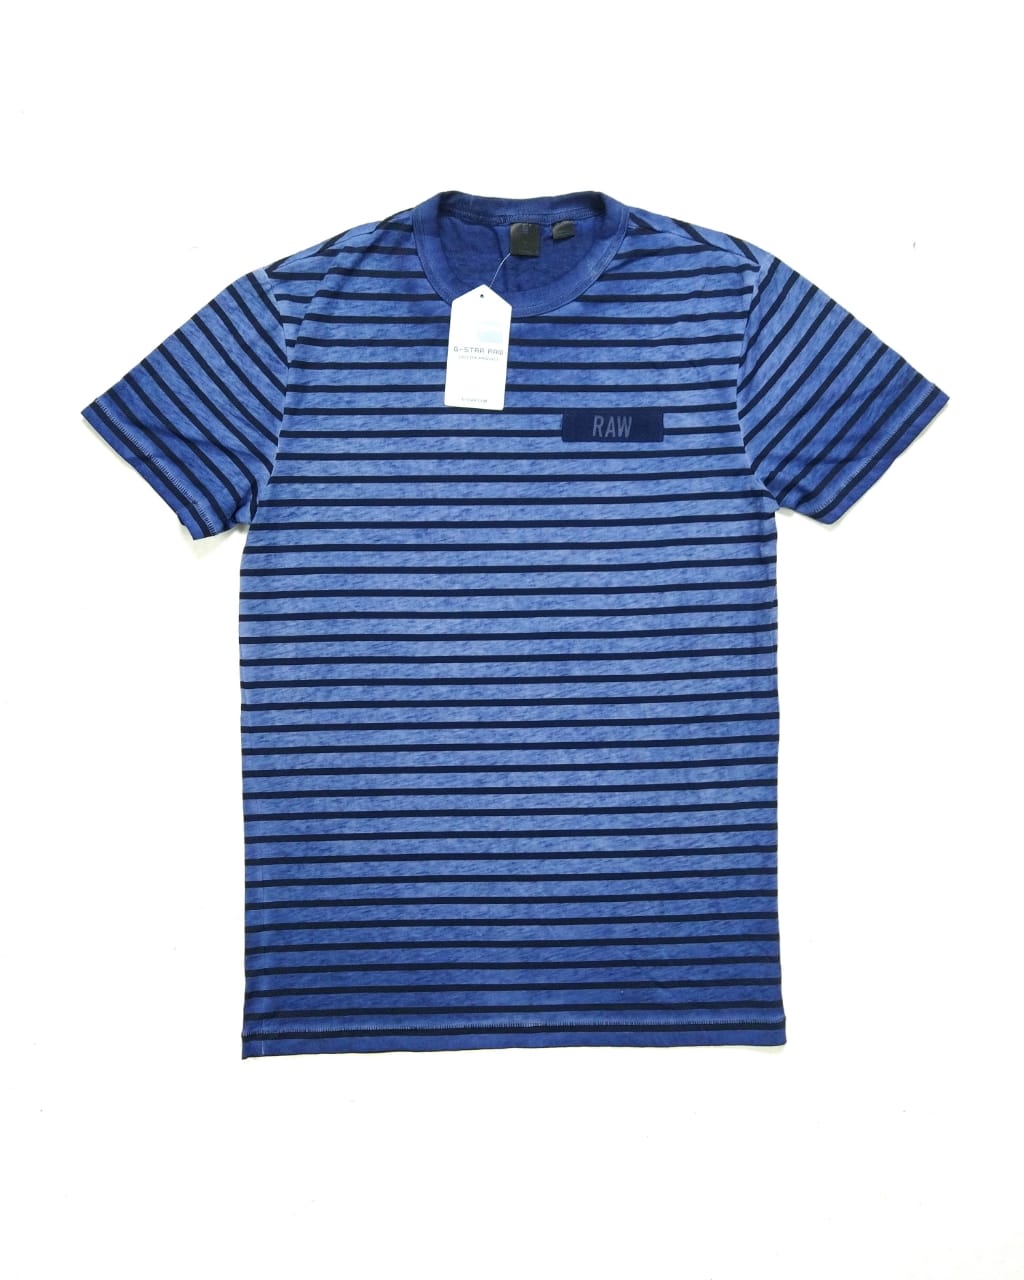 G-Star Men's T-Shirt Rancis Stripe R T Blue